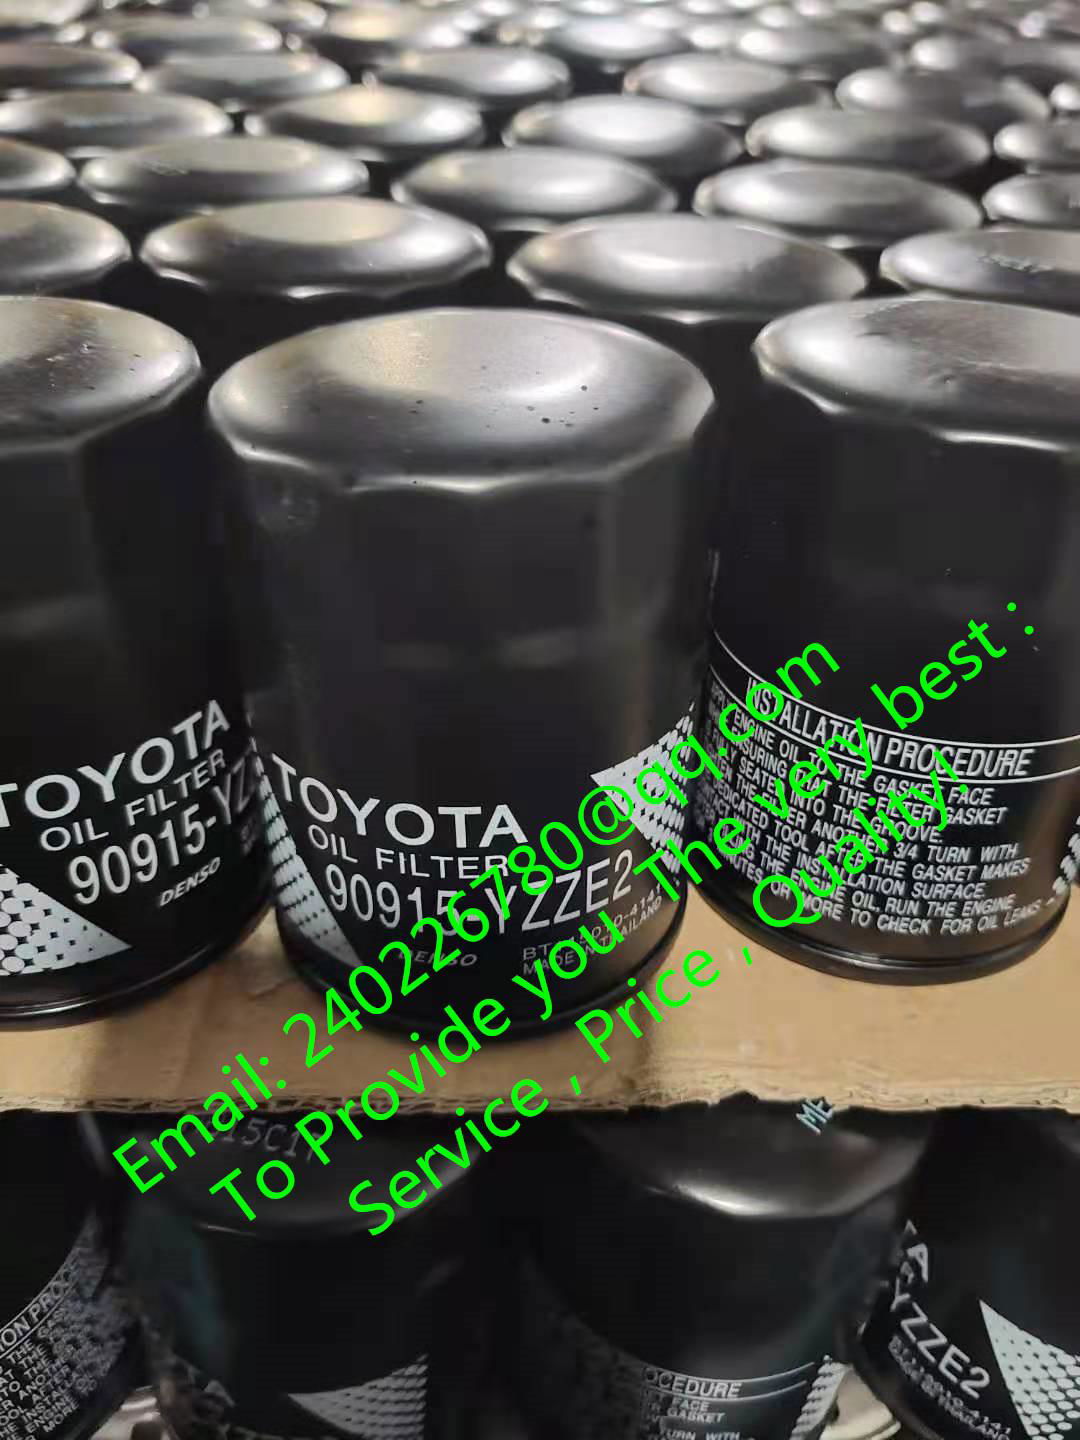 FOR TOYOTA Camry/Corolla Oil Filter  90915-YZZE2 90915YZZE2 90915-10002   3